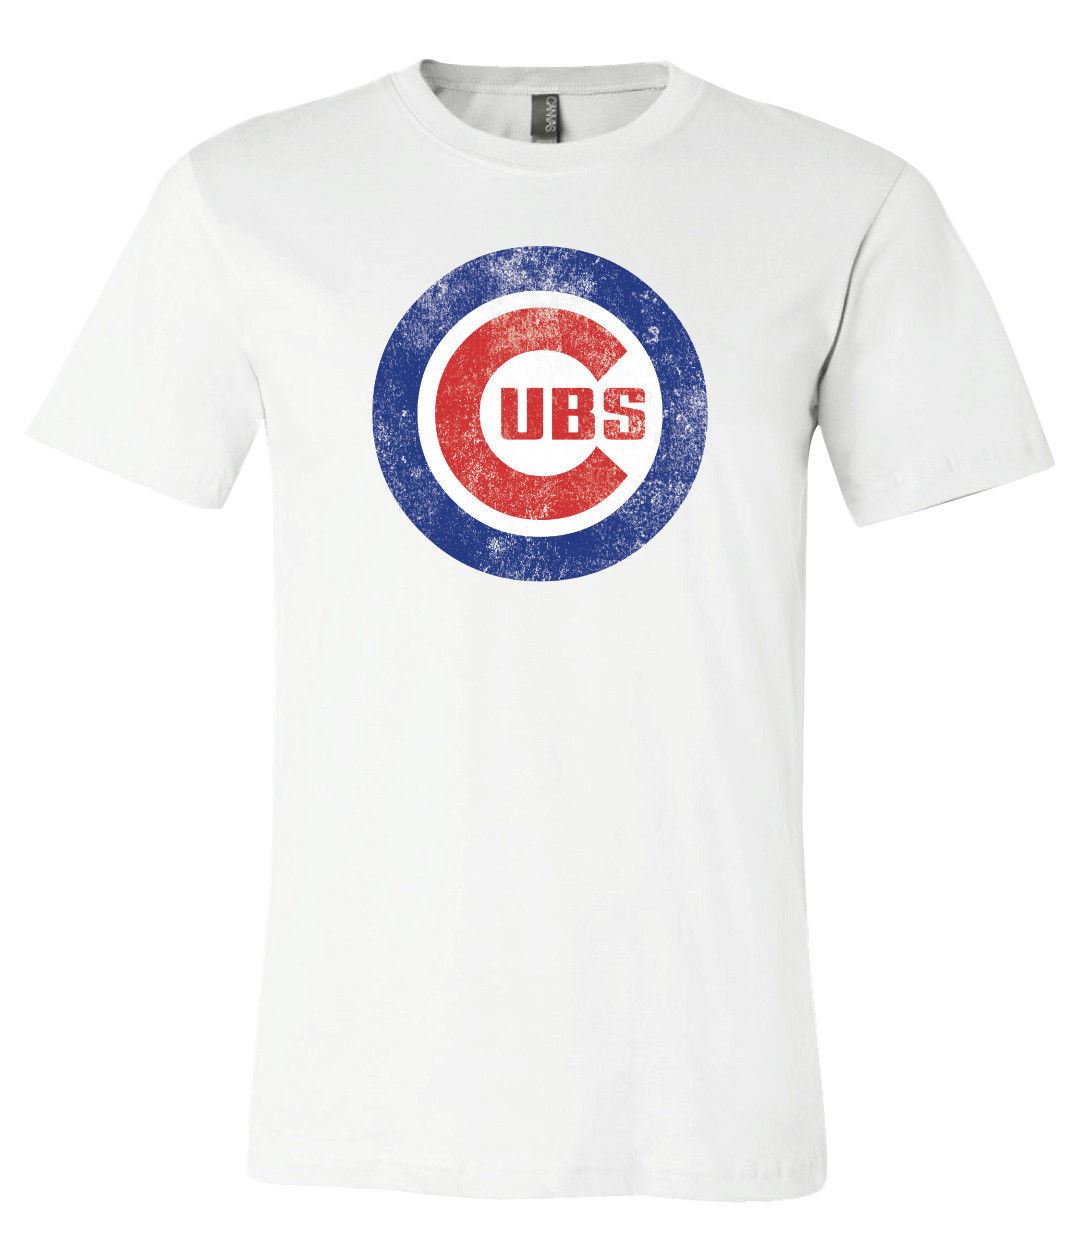 Chicago Cubs Circle Logo Distressed Vintage logo T-shirt 6 Sizes S-3XL